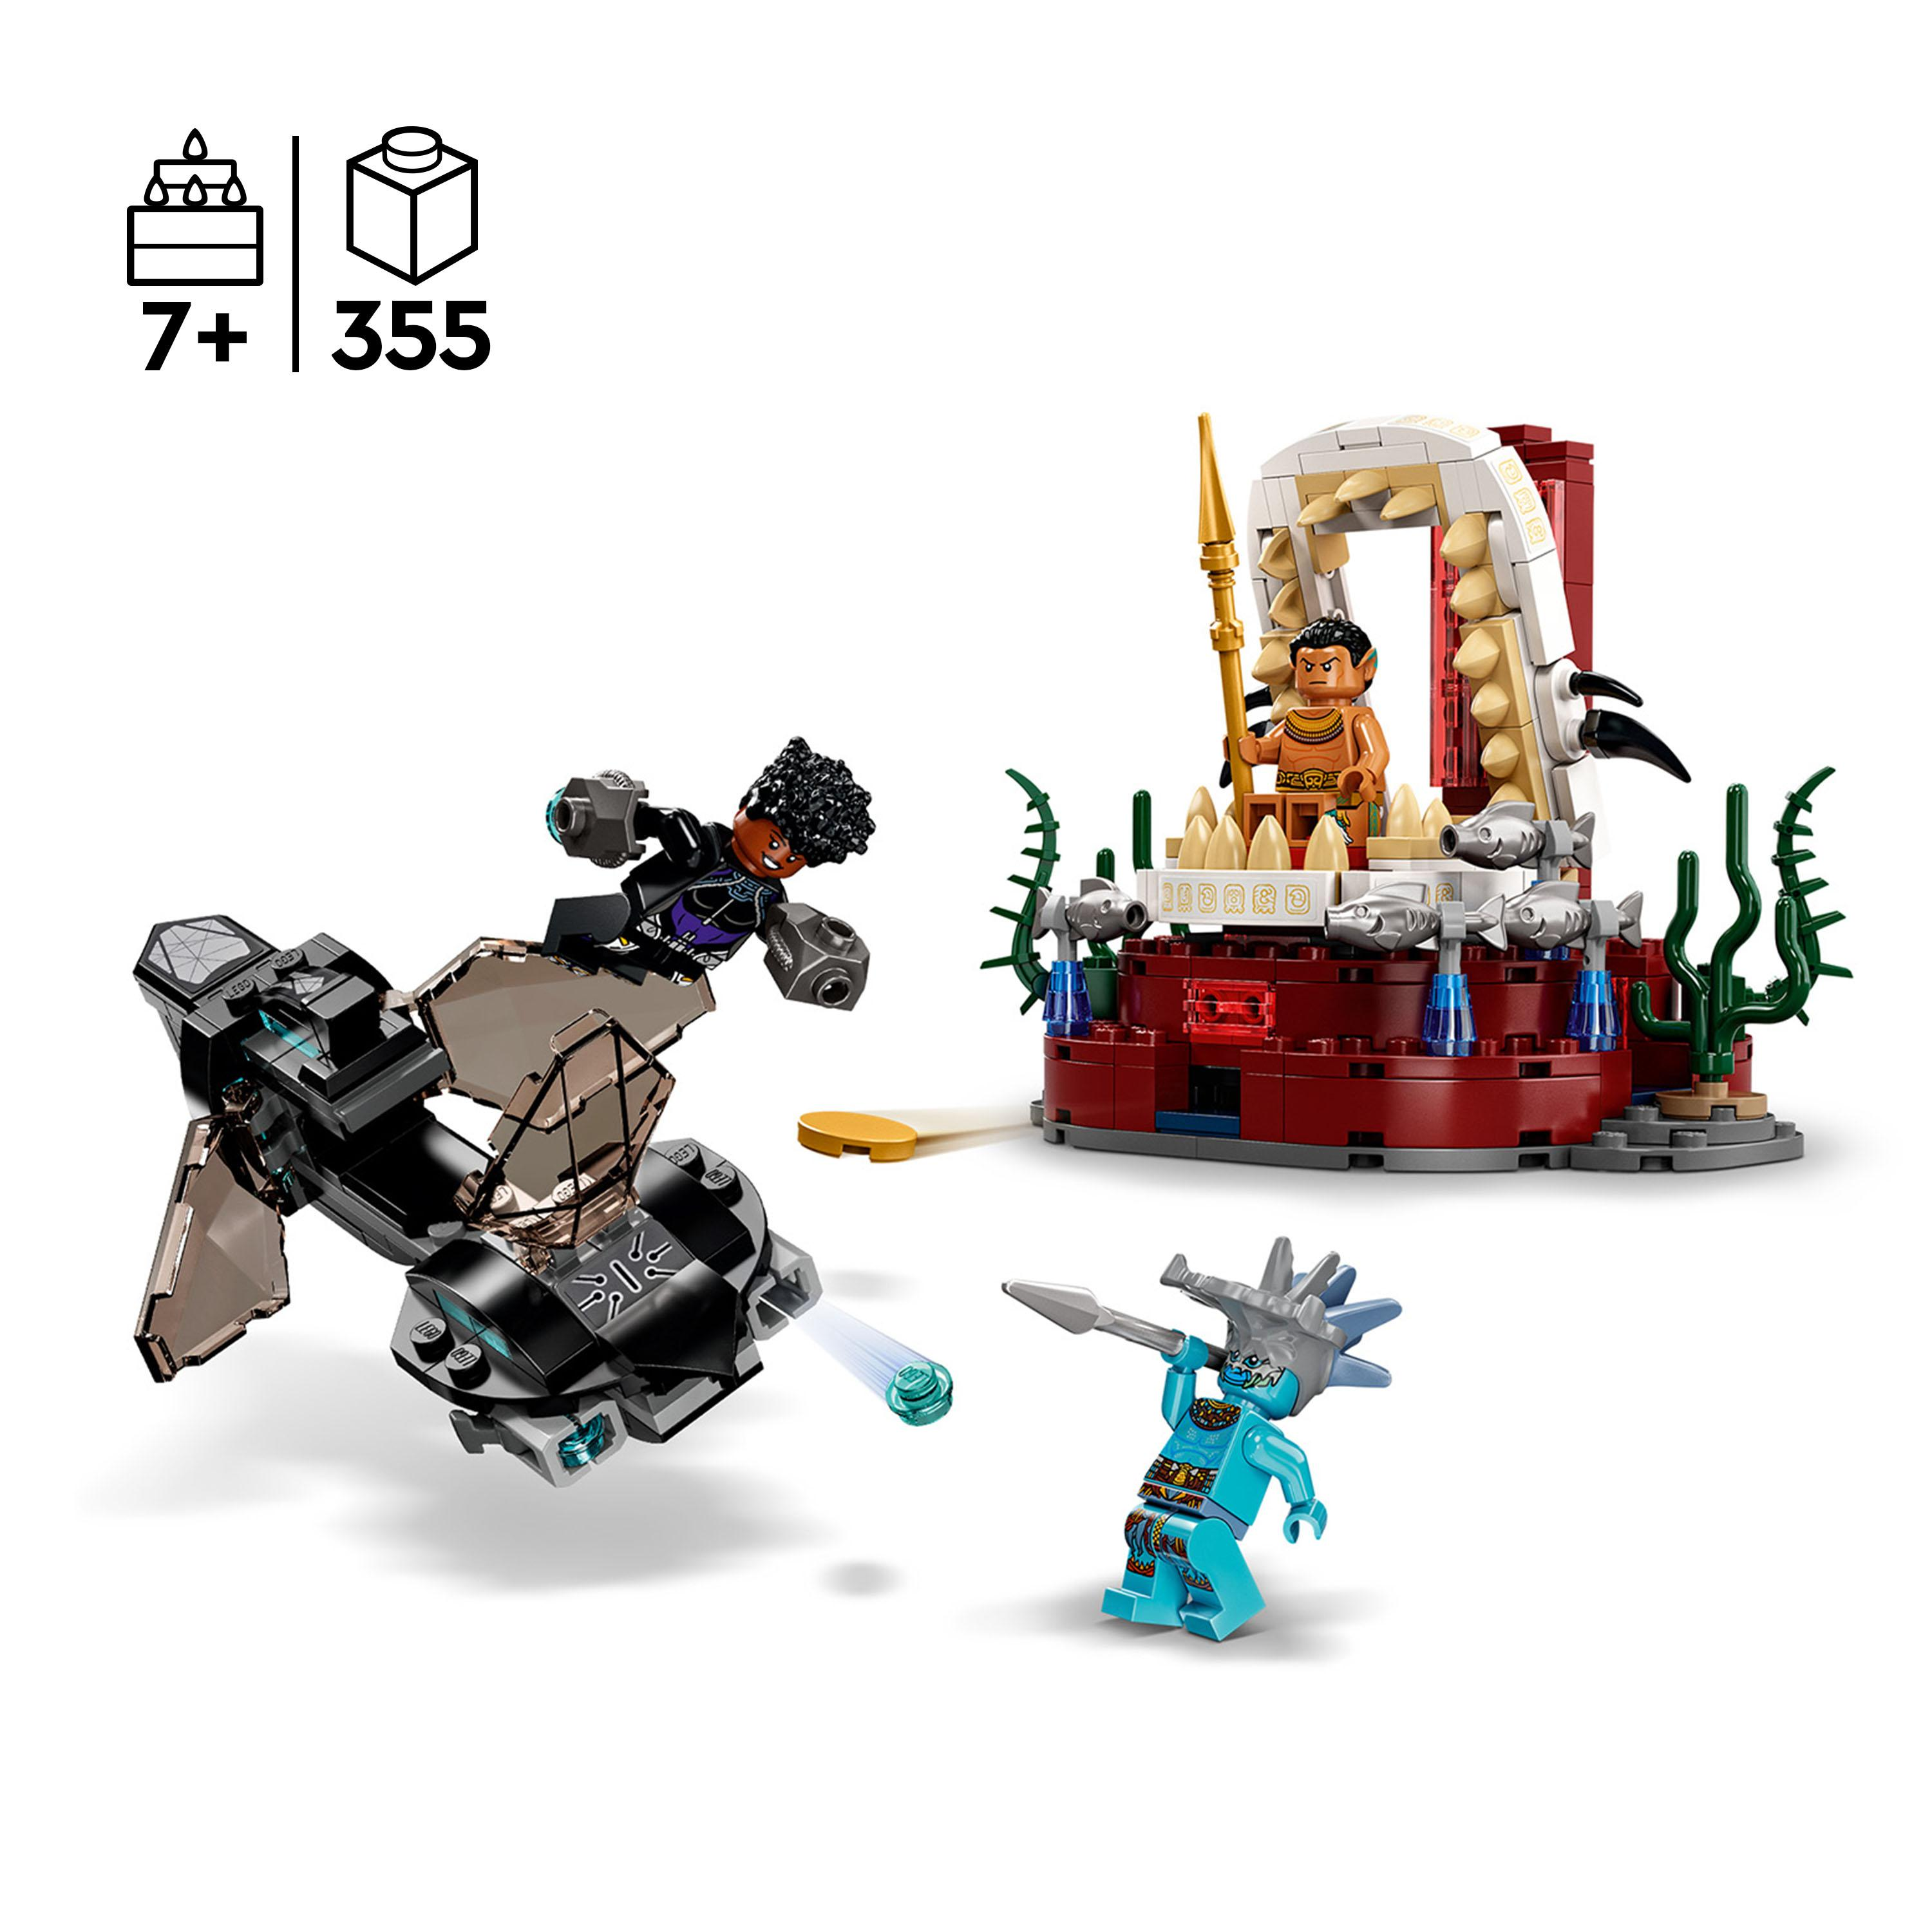 76213 LEGO Mehrfarbig Namors Bausatz, König Marvel Thronsaal